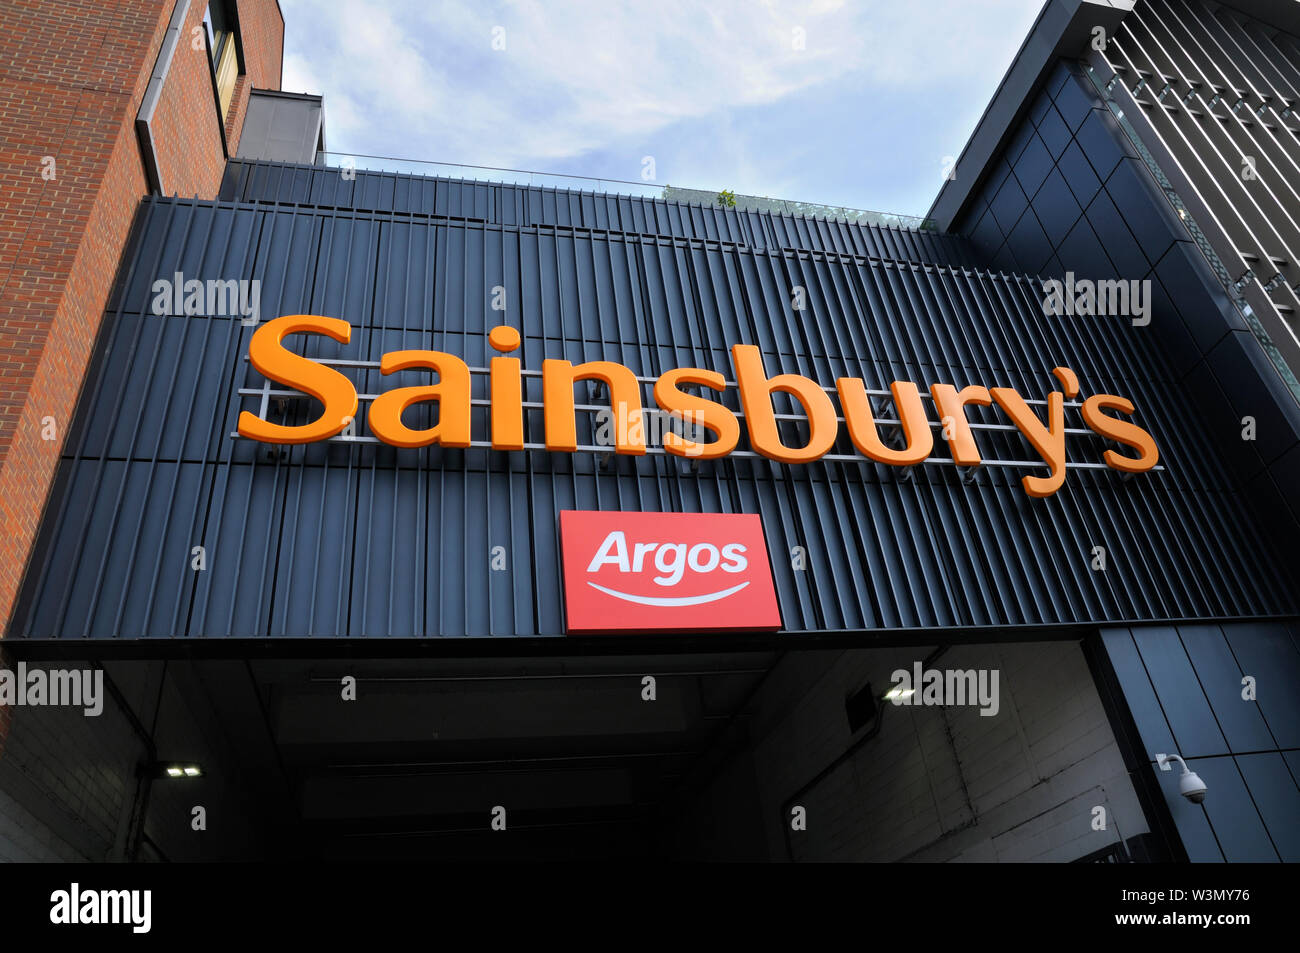 Sainsbury's Argos exterior, Fulham, London, England, UK Stock Photo